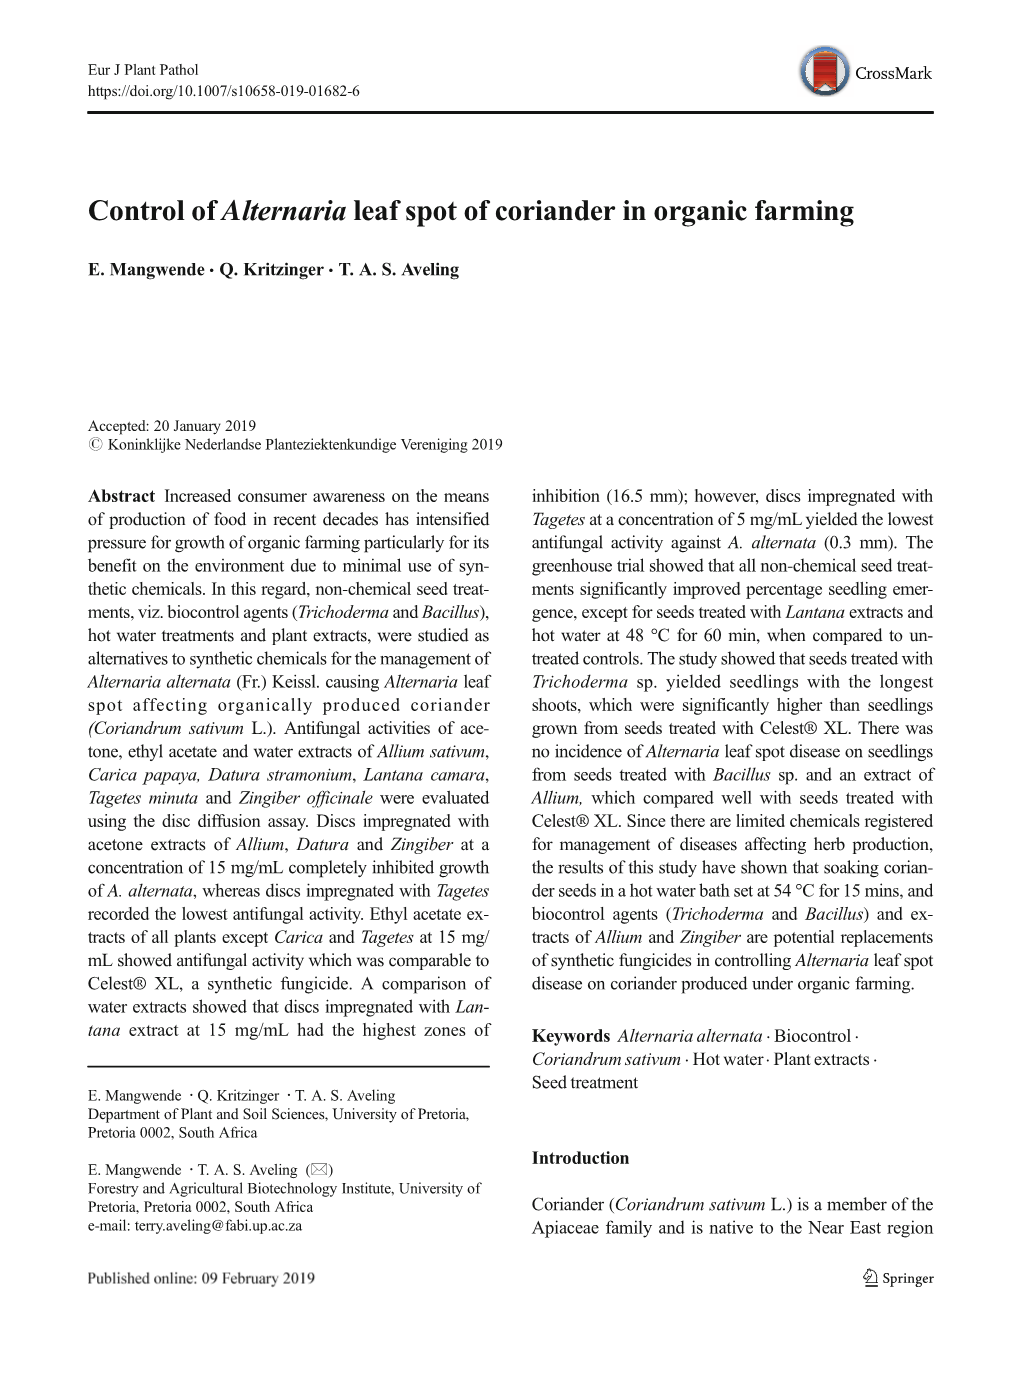 Control of Alternaria Leaf Spot of Coriander in Organic Farming